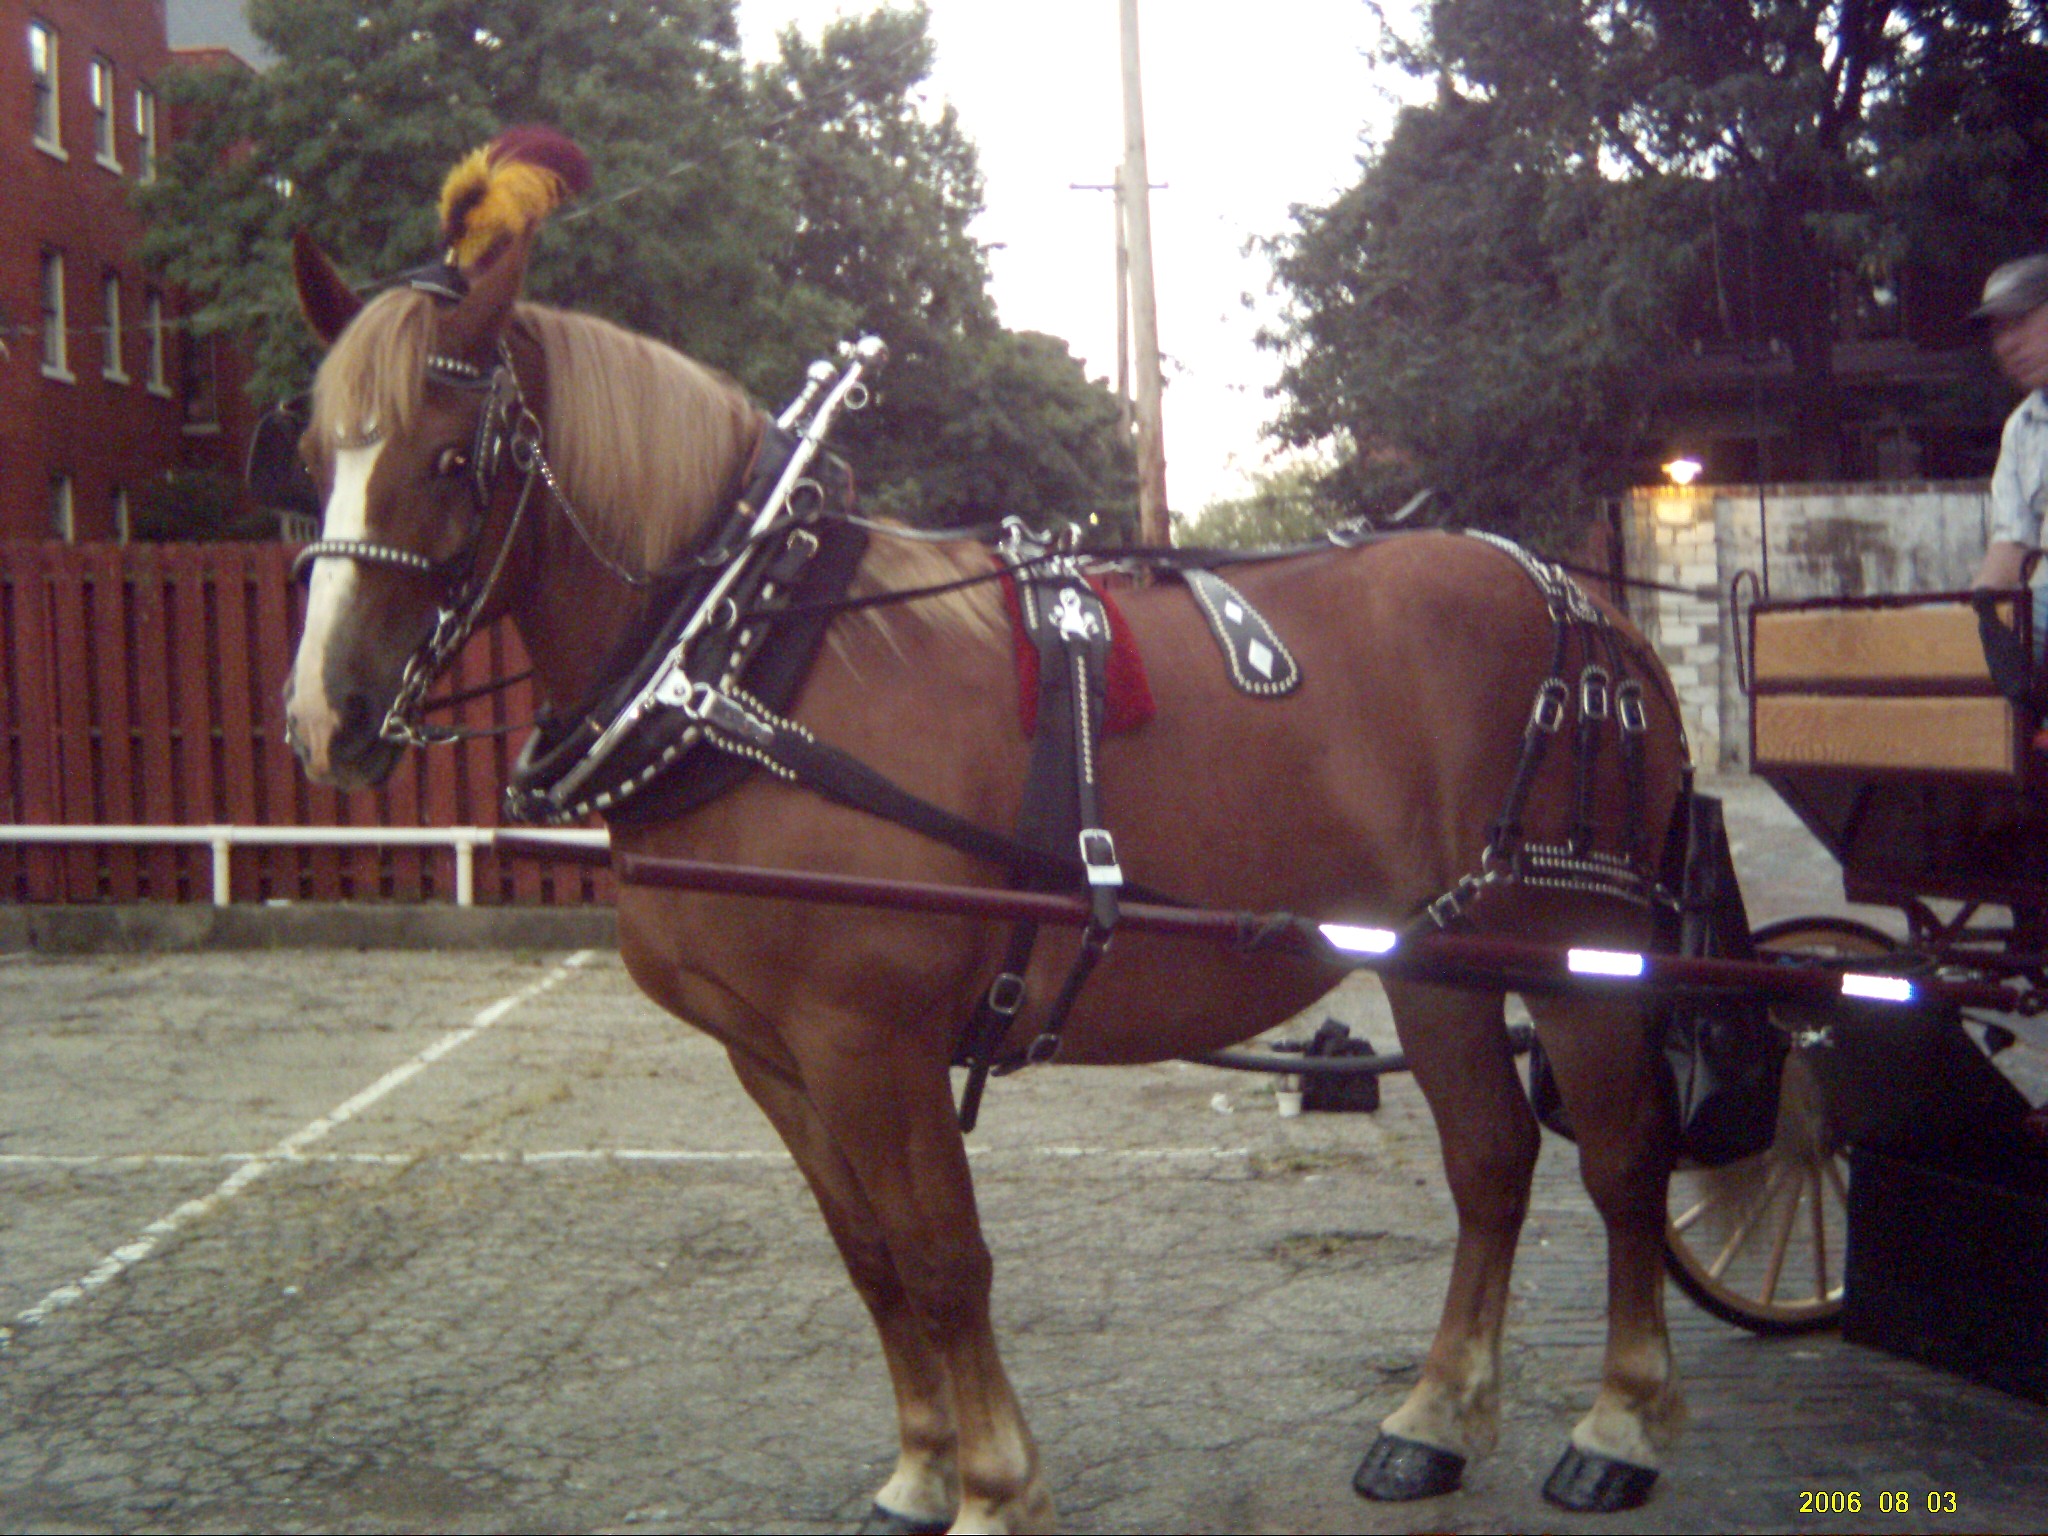 CrackerJack with his wedding carriage in downtown Cincinnati Ohio - OH